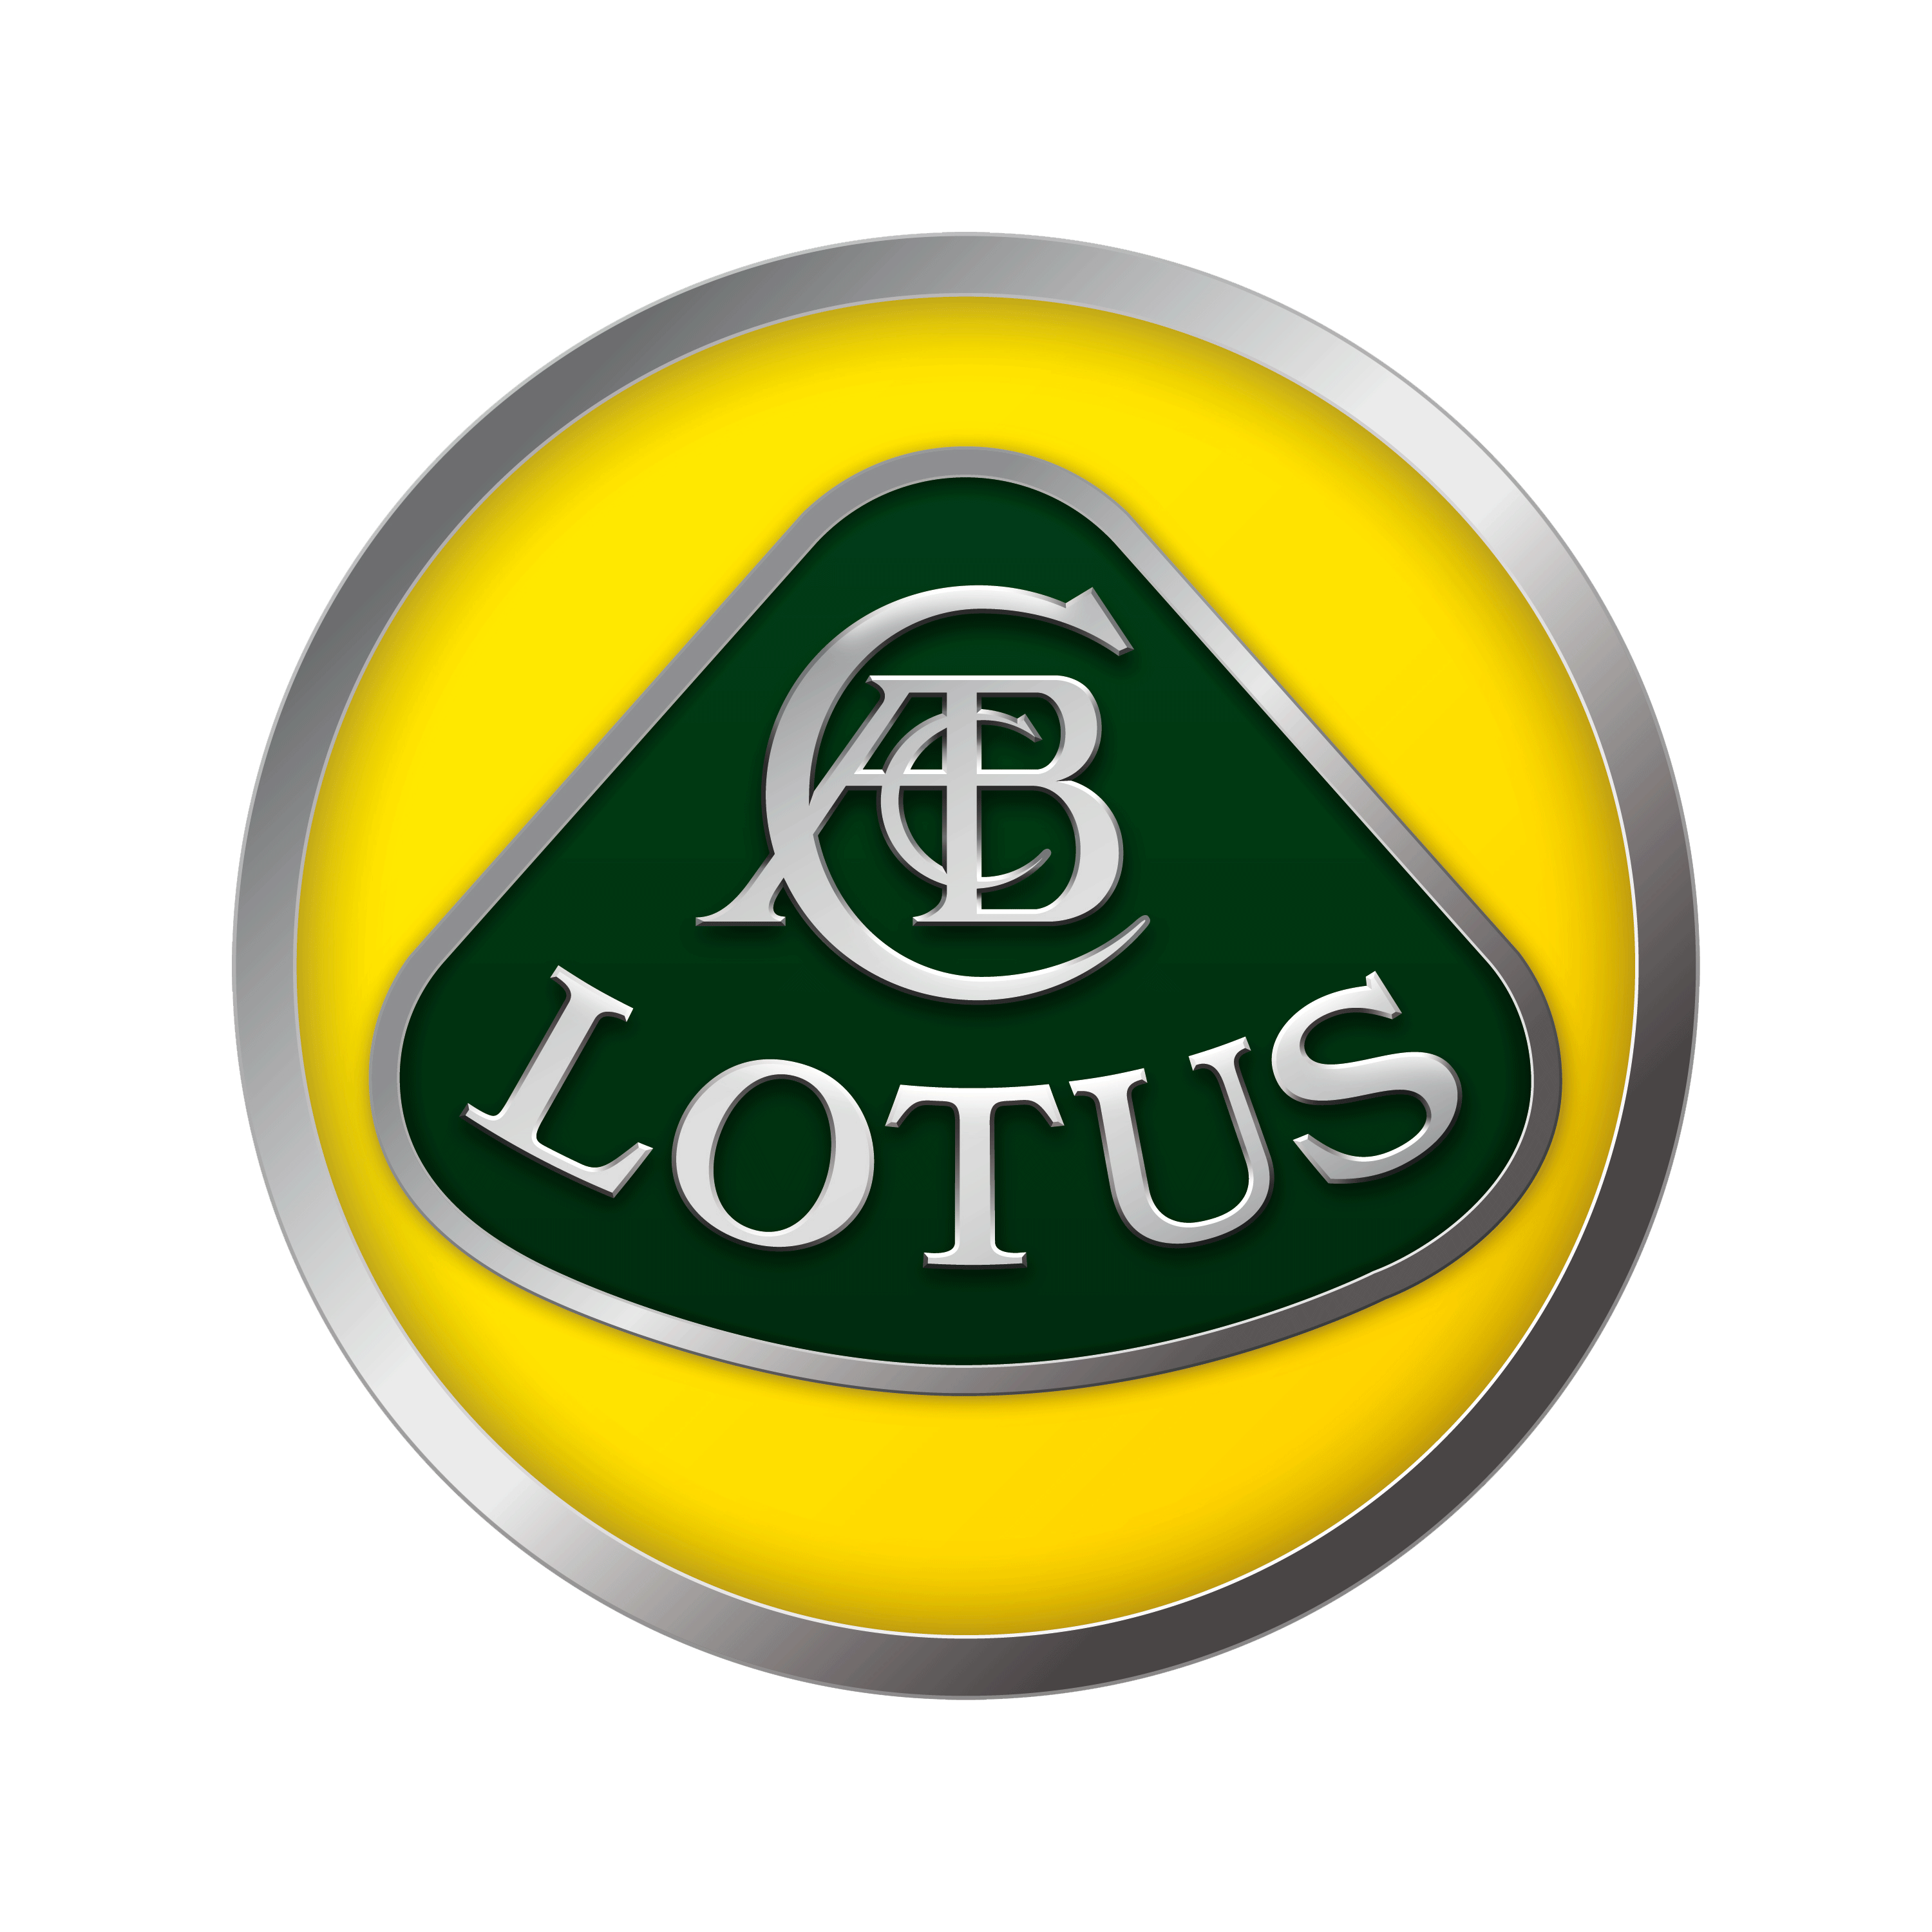 Car Logos, Car Company Logos, List of car logos